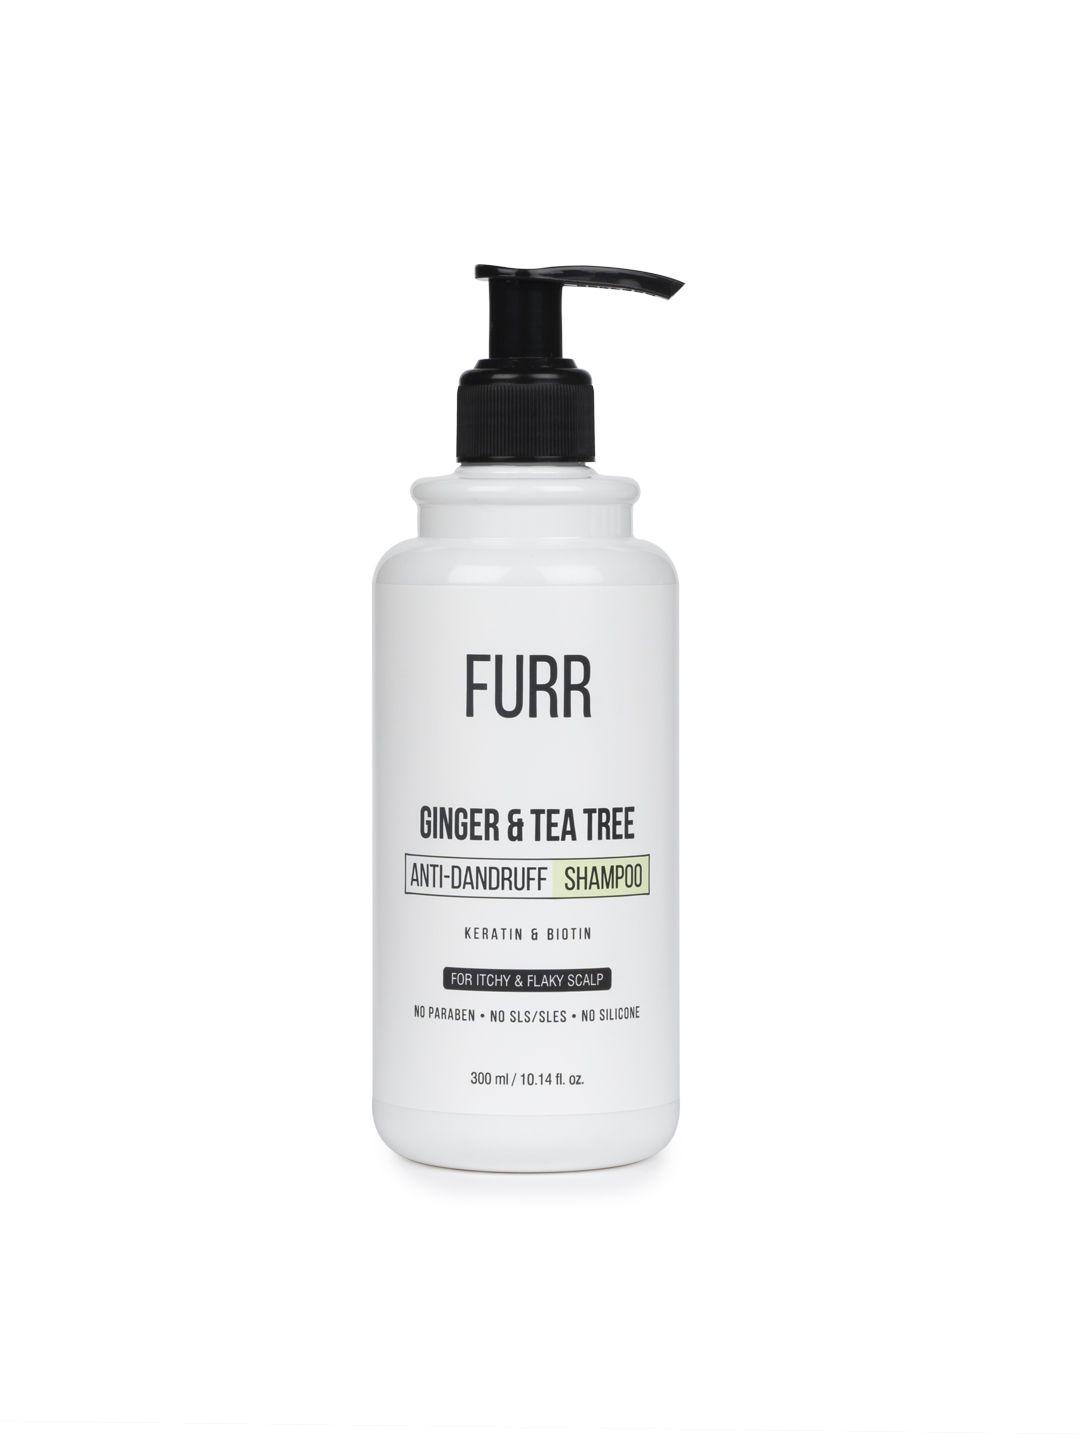 peesafe furr ginger & tea tree anti dandruff shampoo with keratin & biotin - 300ml